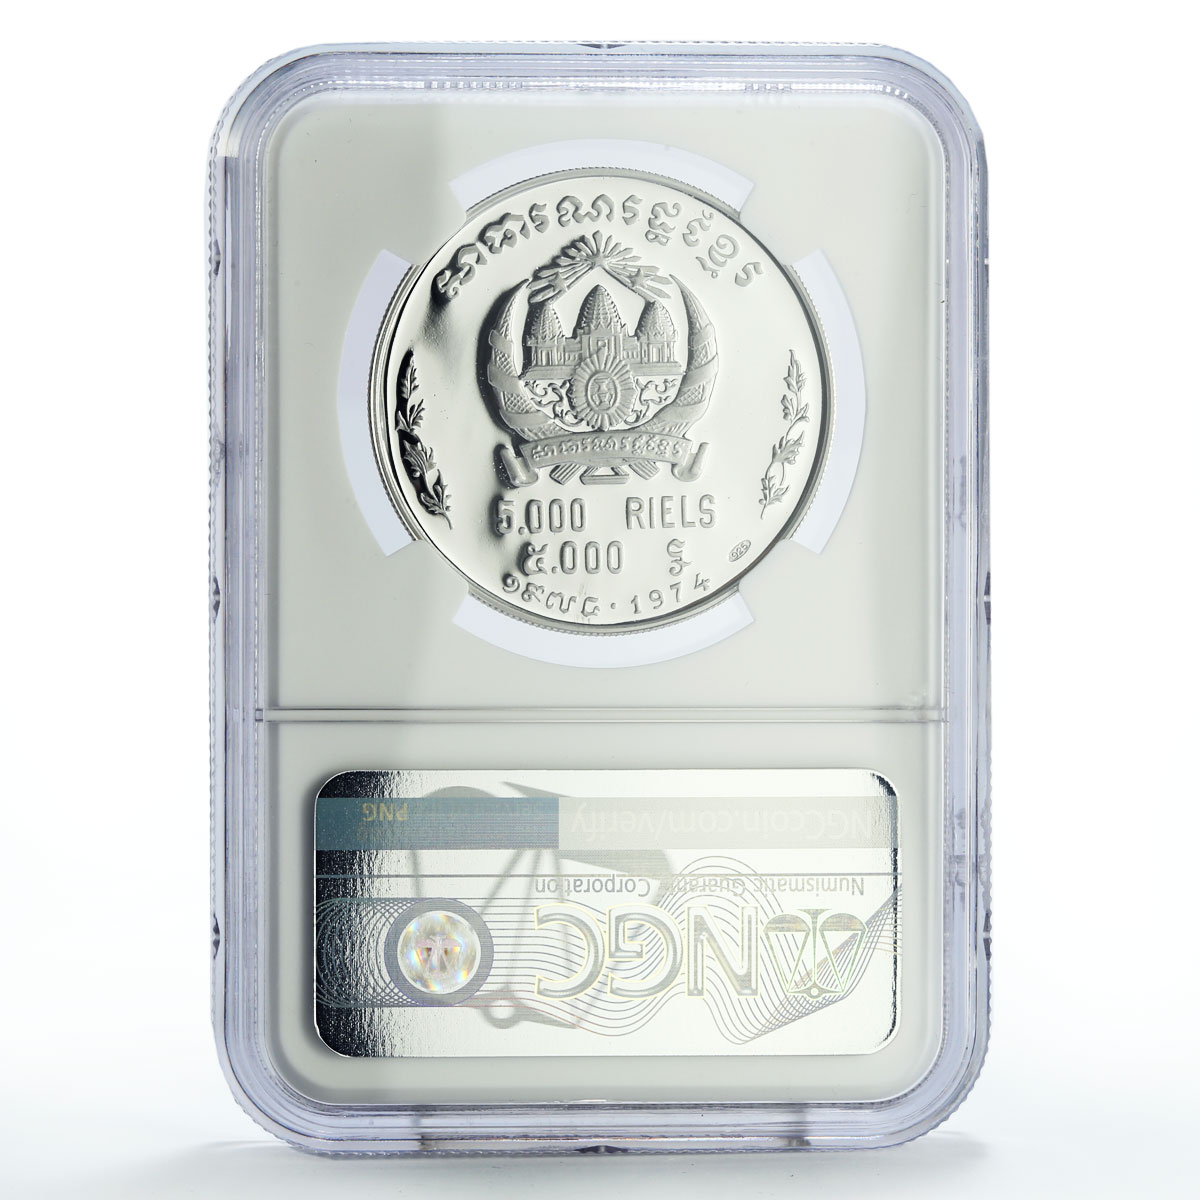 Cambodia 5000 riels Khmer Republic Angkor Wat Temple PF69 NGC silver coin 1974